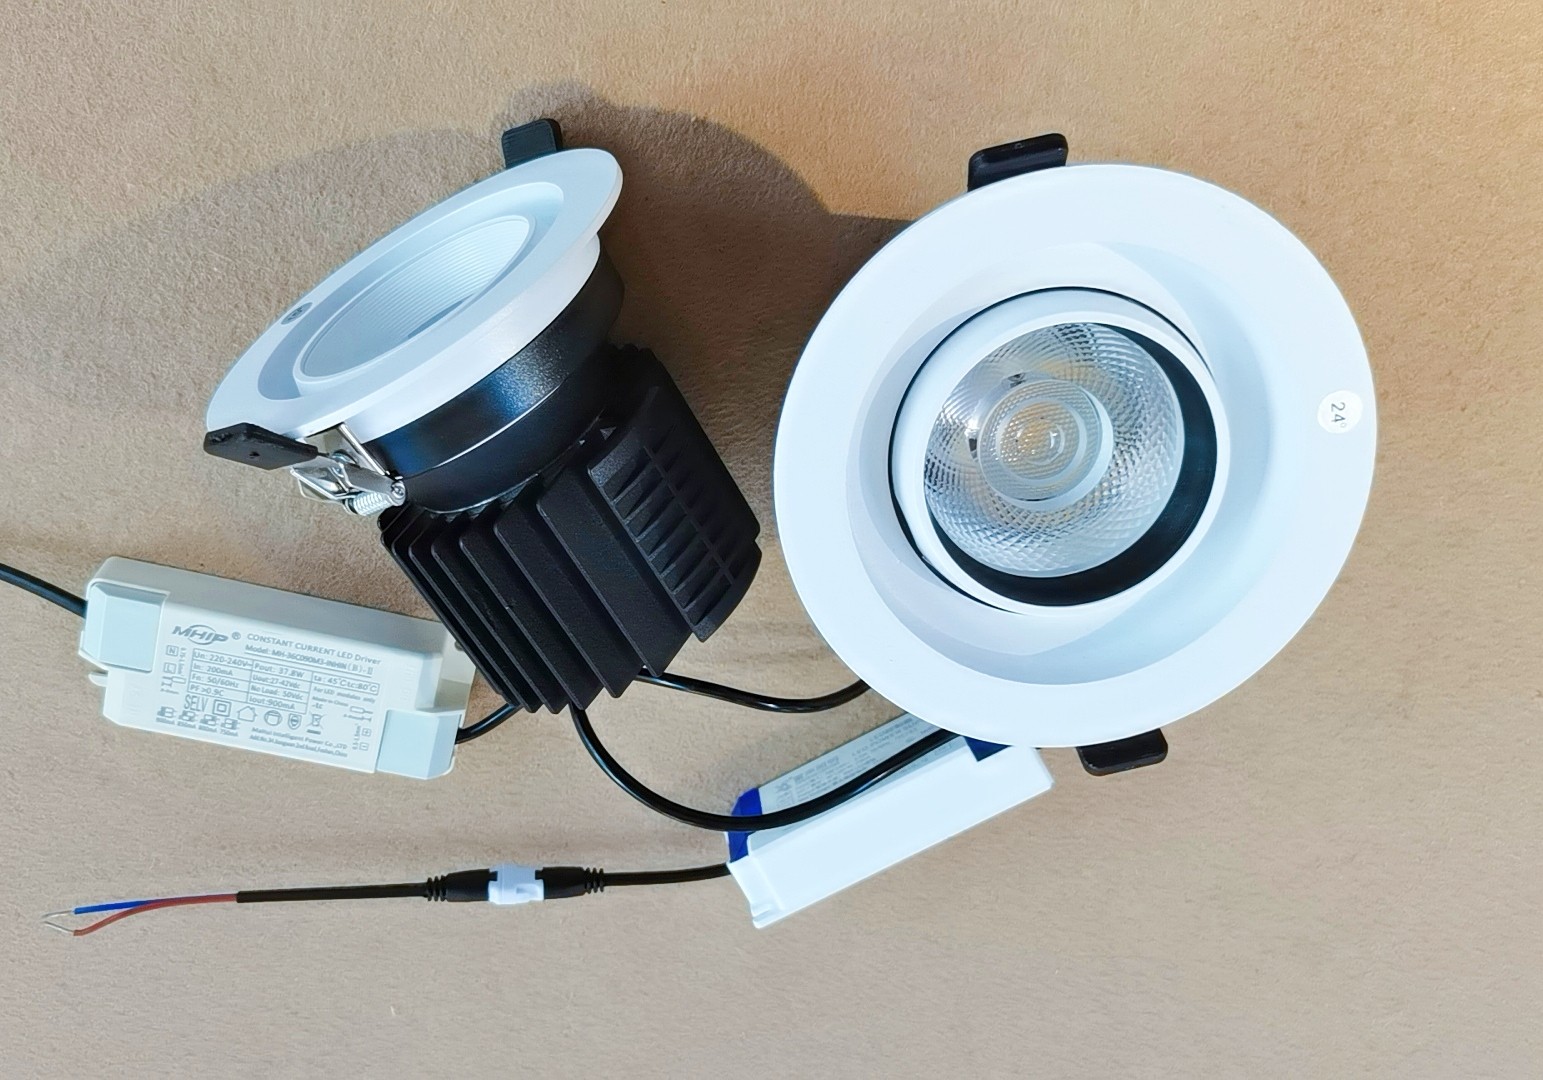 COTV直播-佛山市雷声照明有限公司生产销售“雷声”系列商业照明灯具、LED导轨灯，象鼻灯、牛眼灯、洗墙灯、深防眩射灯及各种筒灯，欢迎大家光临！